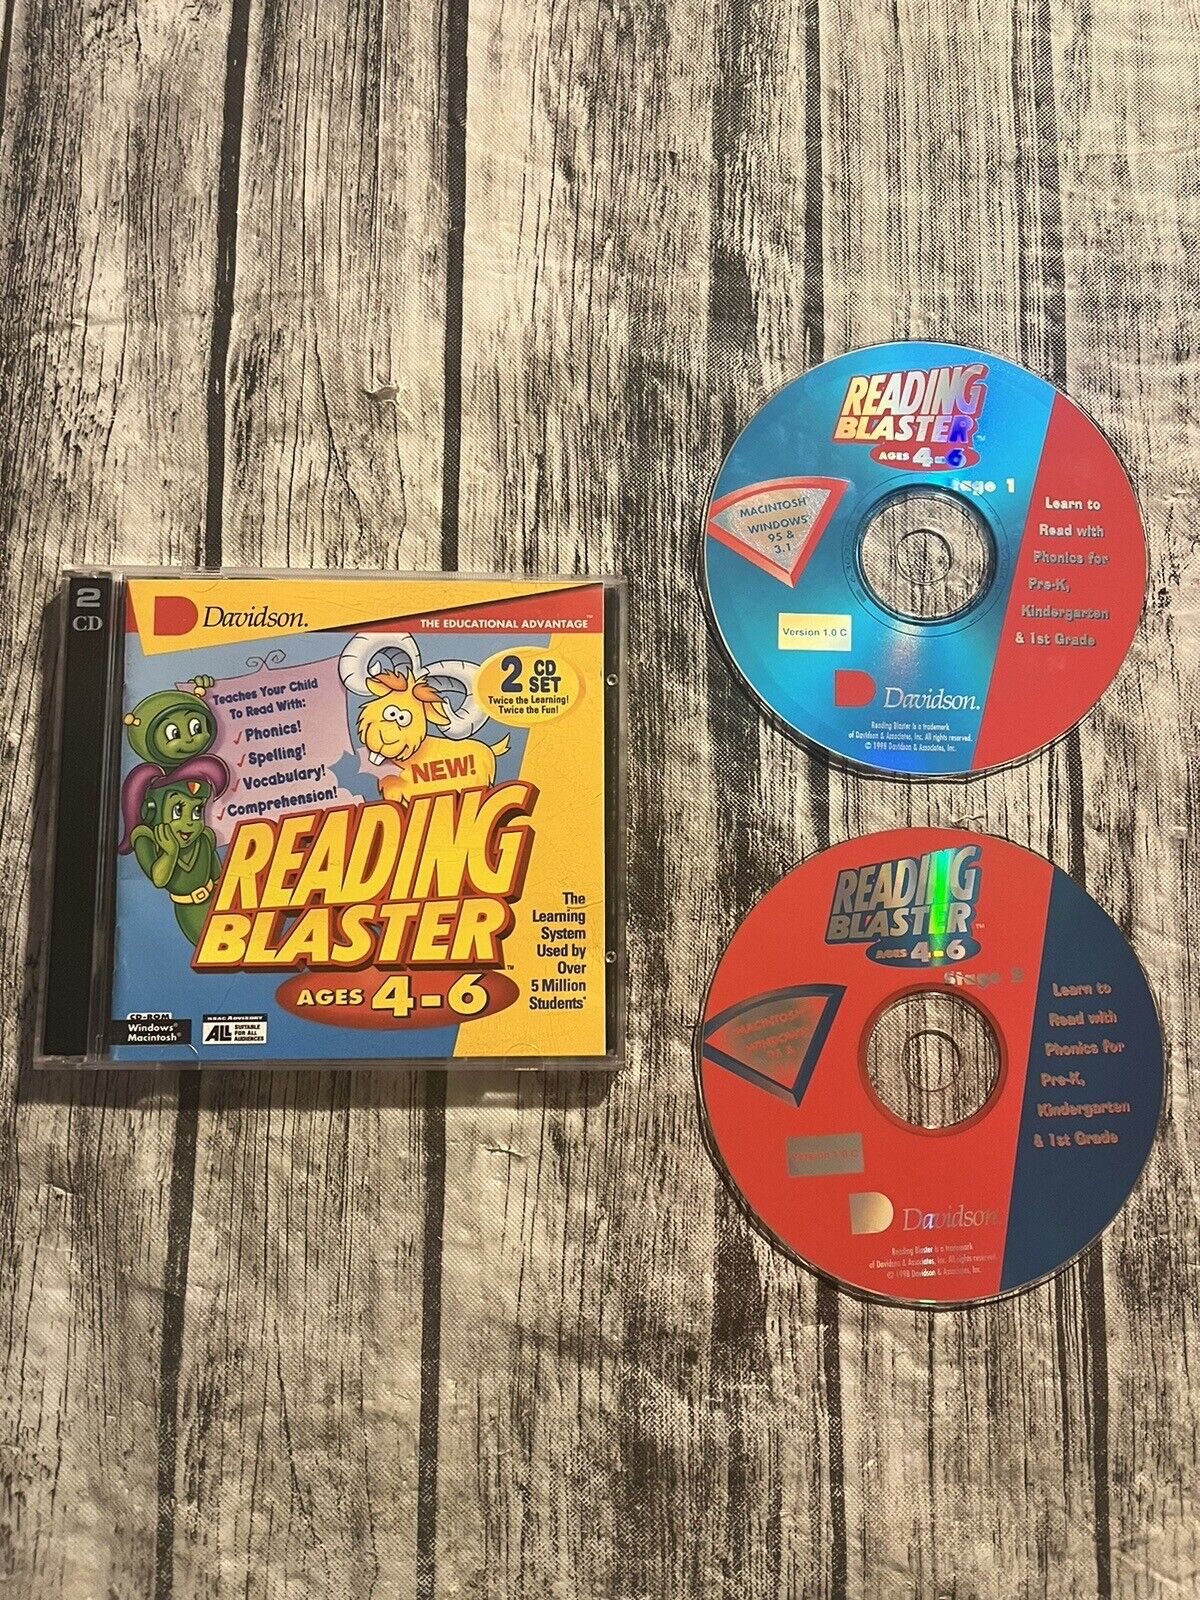 READING BLASTER AGES 4-6  Davidson Learning CD-ROM Game 2 Disc Set